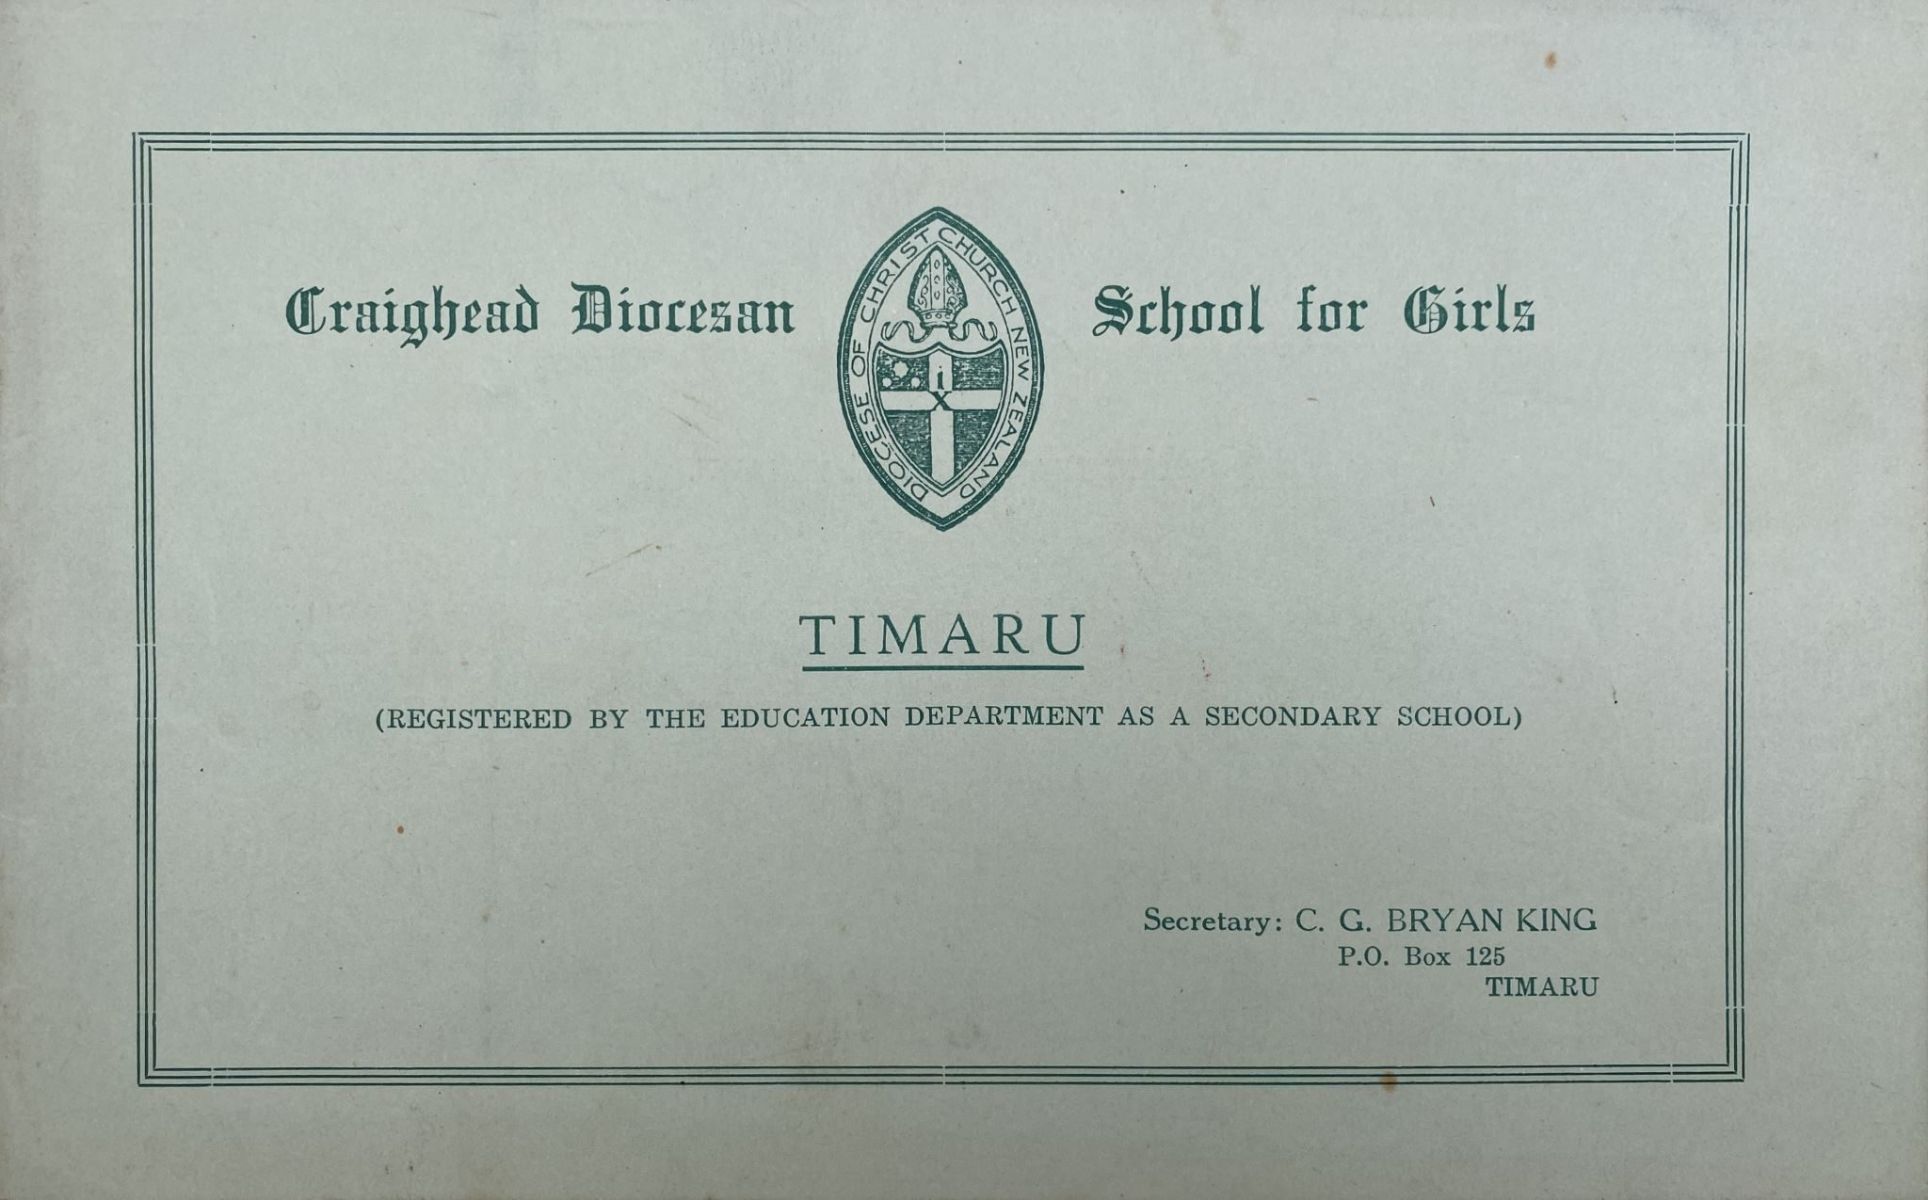 CRAIGHEAD DIOCESAN: School for Girls Timaru - Information guide